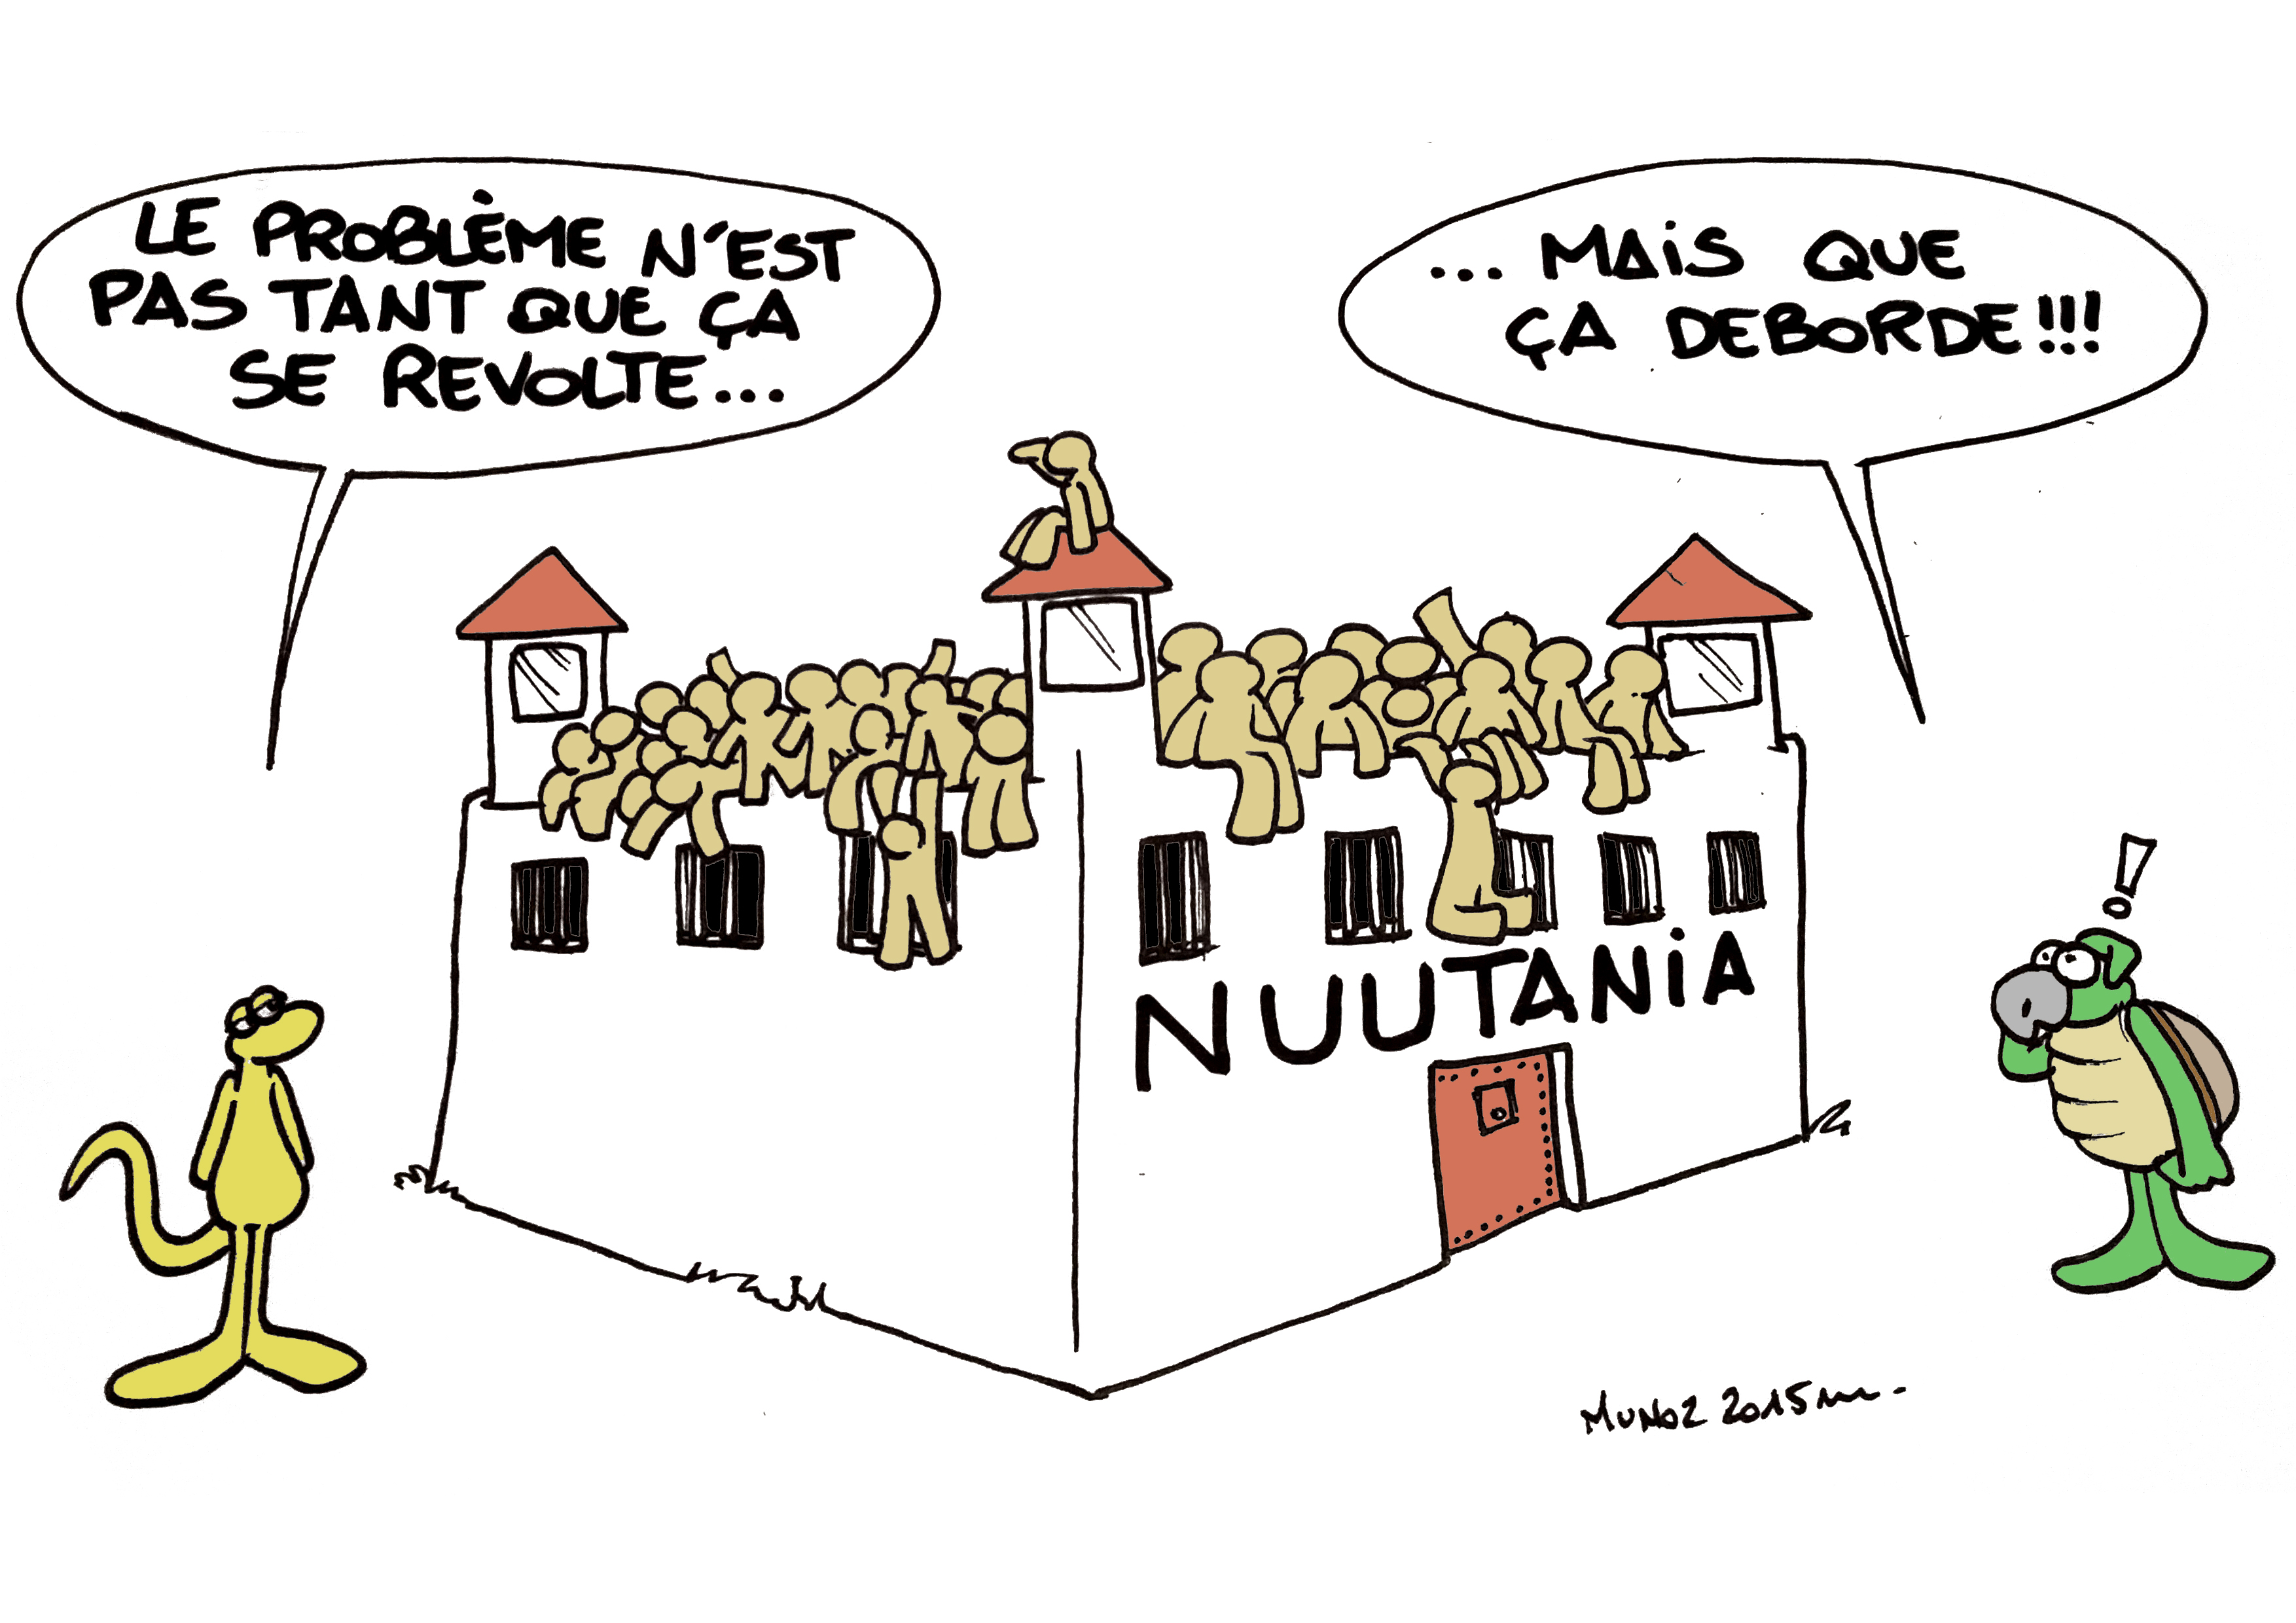 "Nuutania" selon Munoz